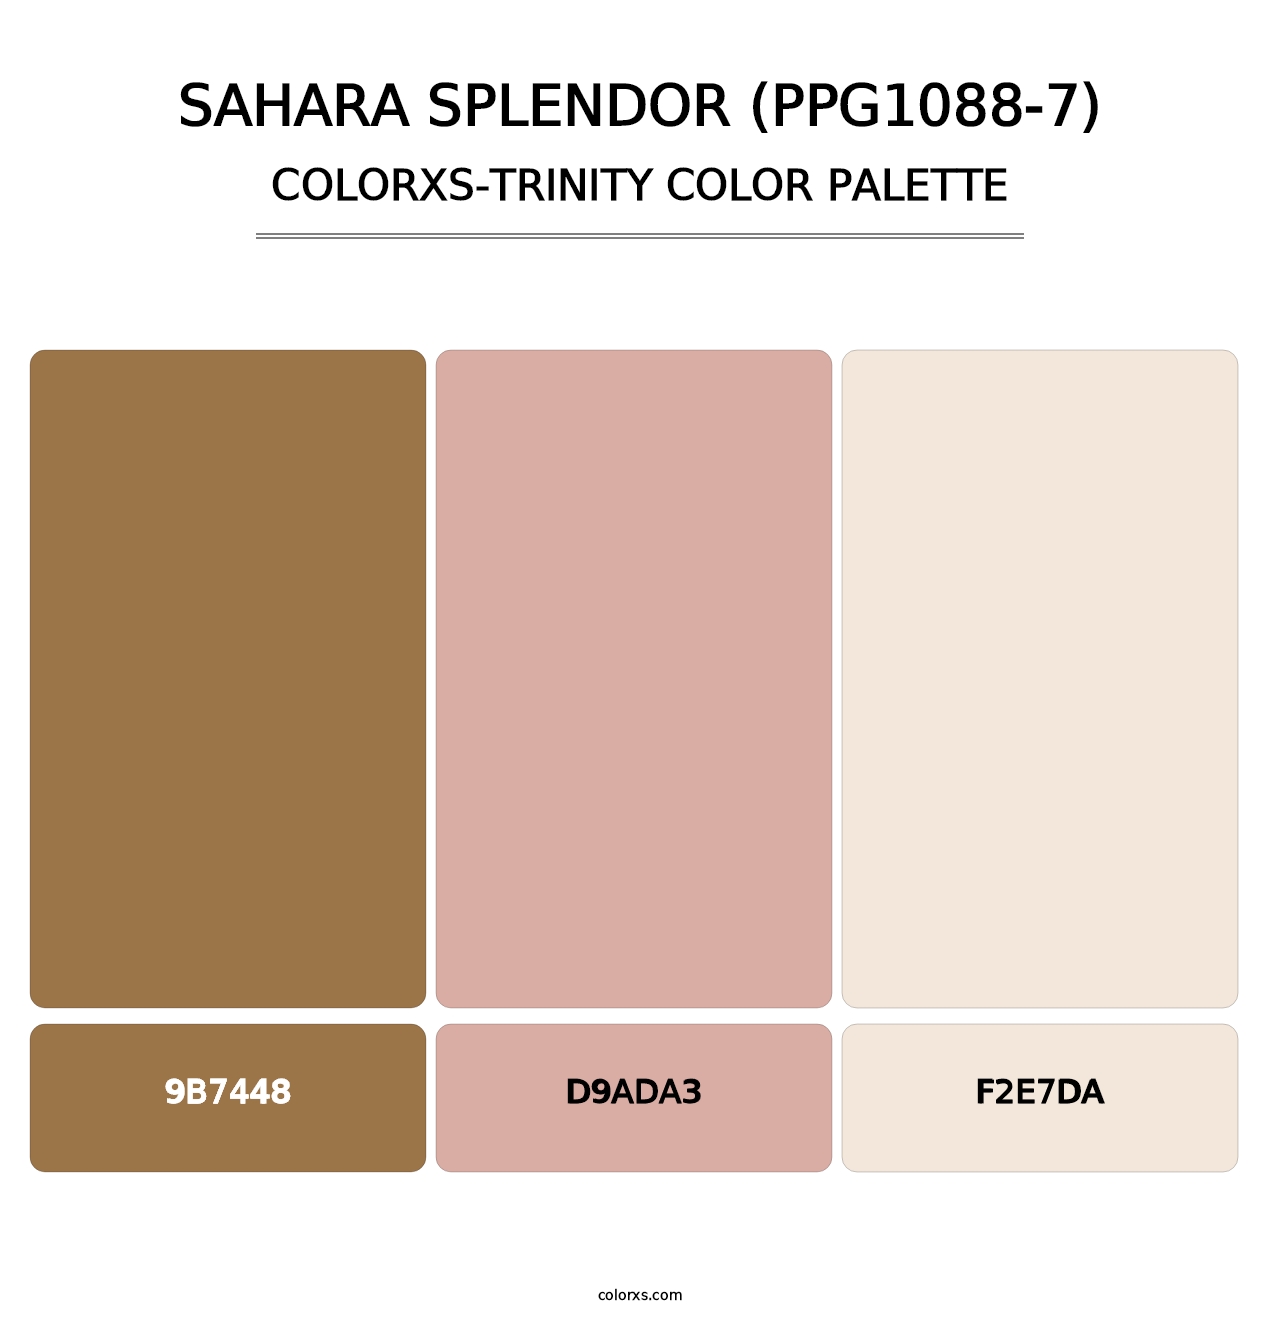 Sahara Splendor (PPG1088-7) - Colorxs Trinity Palette